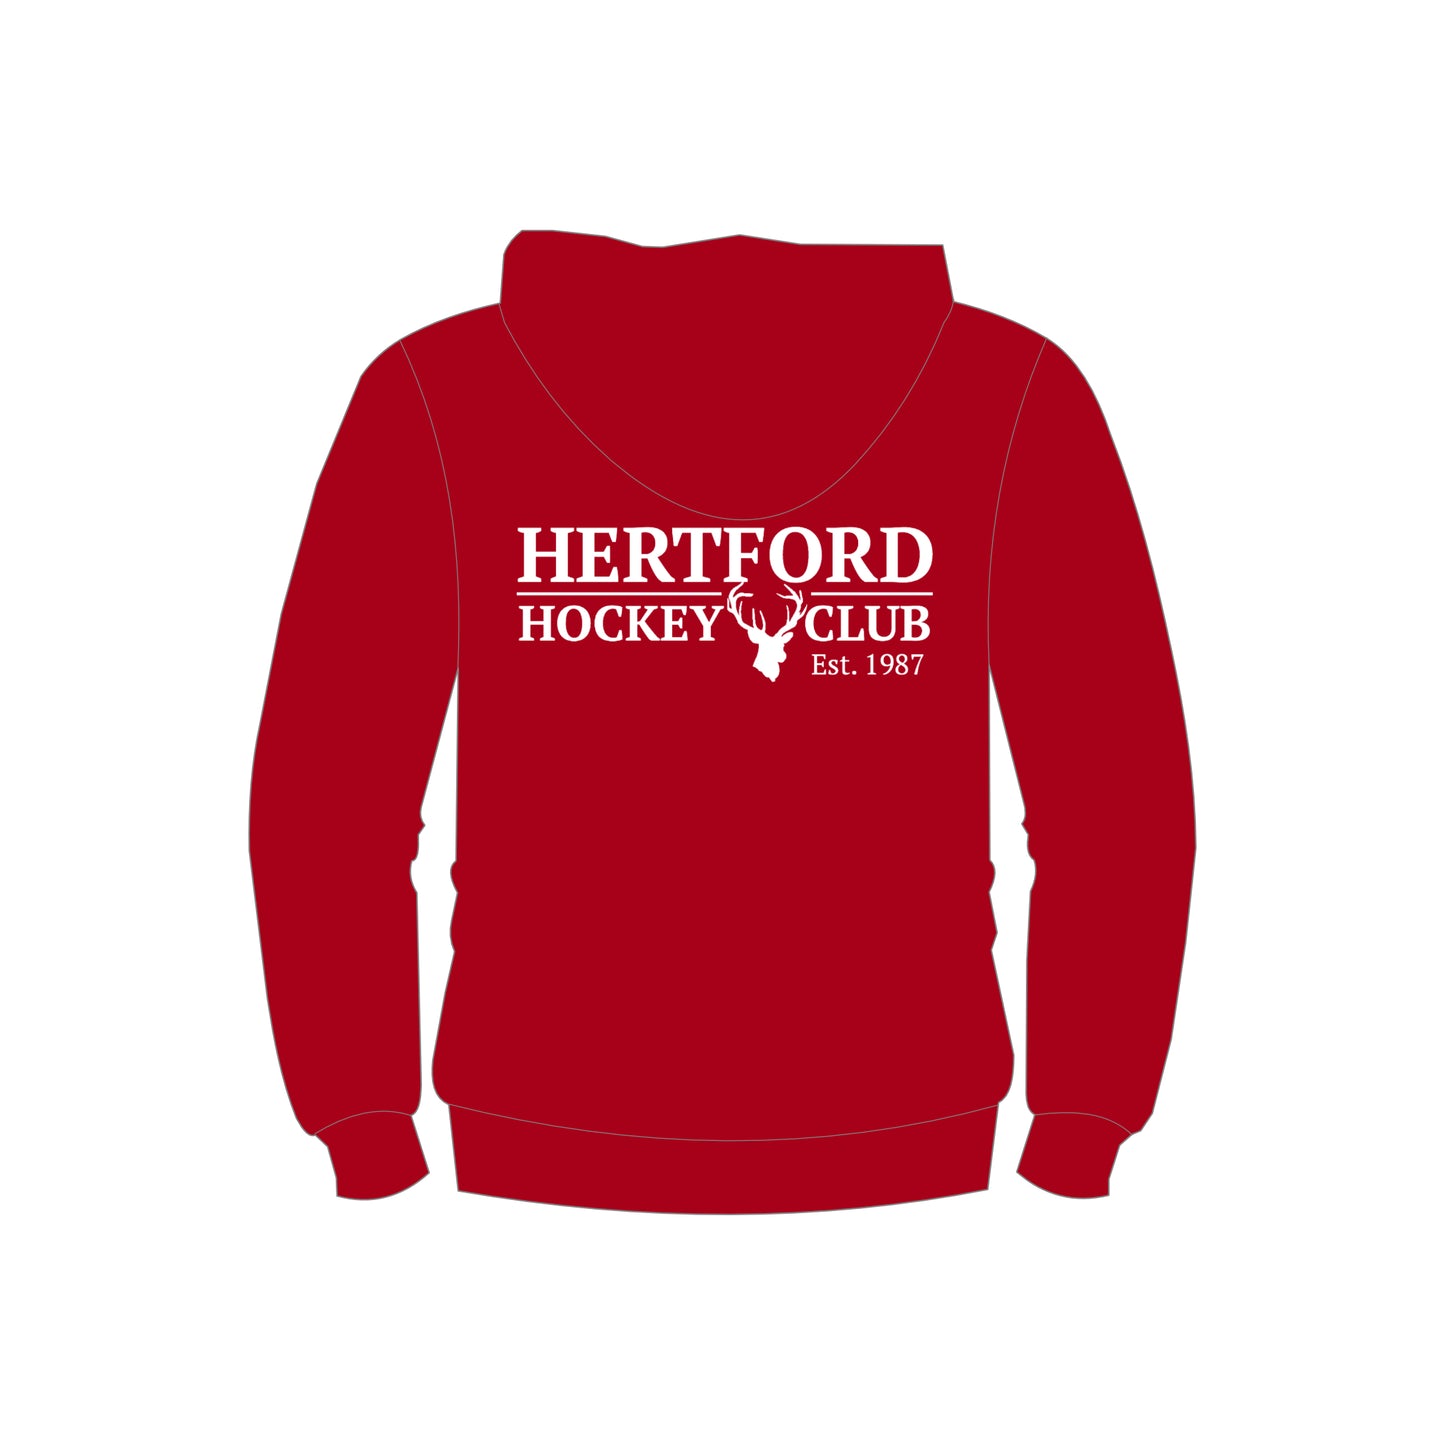 Hertford HC - Hoody Unisex Red